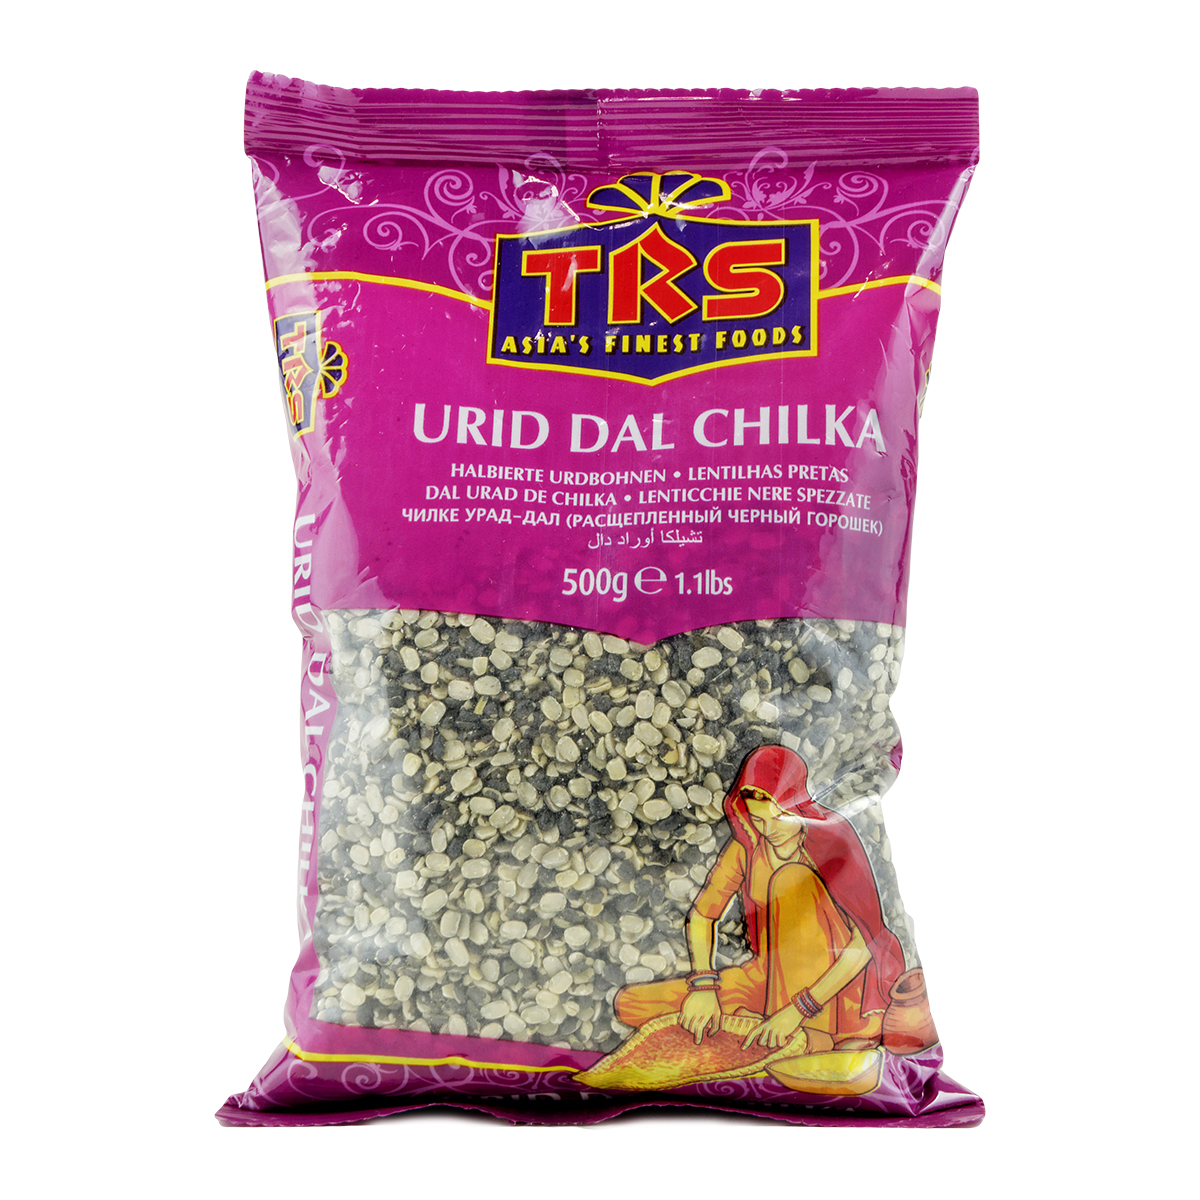 Diverse - Urid Dal Chilka (linte neagra) TRS 500g, asianfood.ro